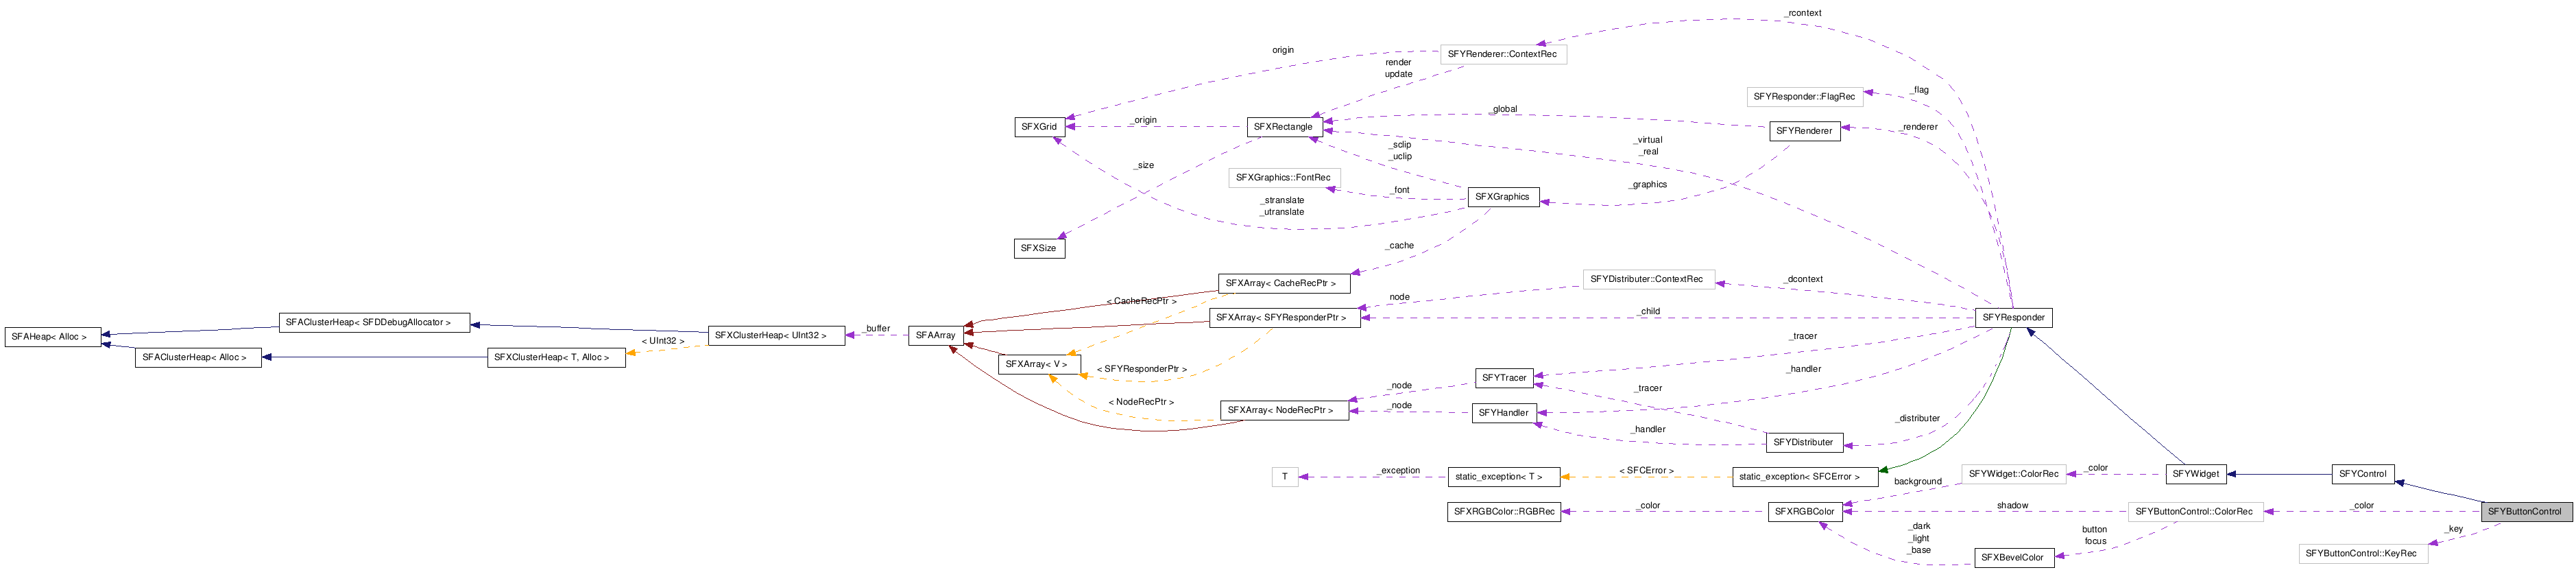  Collaboration diagram of SFYButtonControlClass